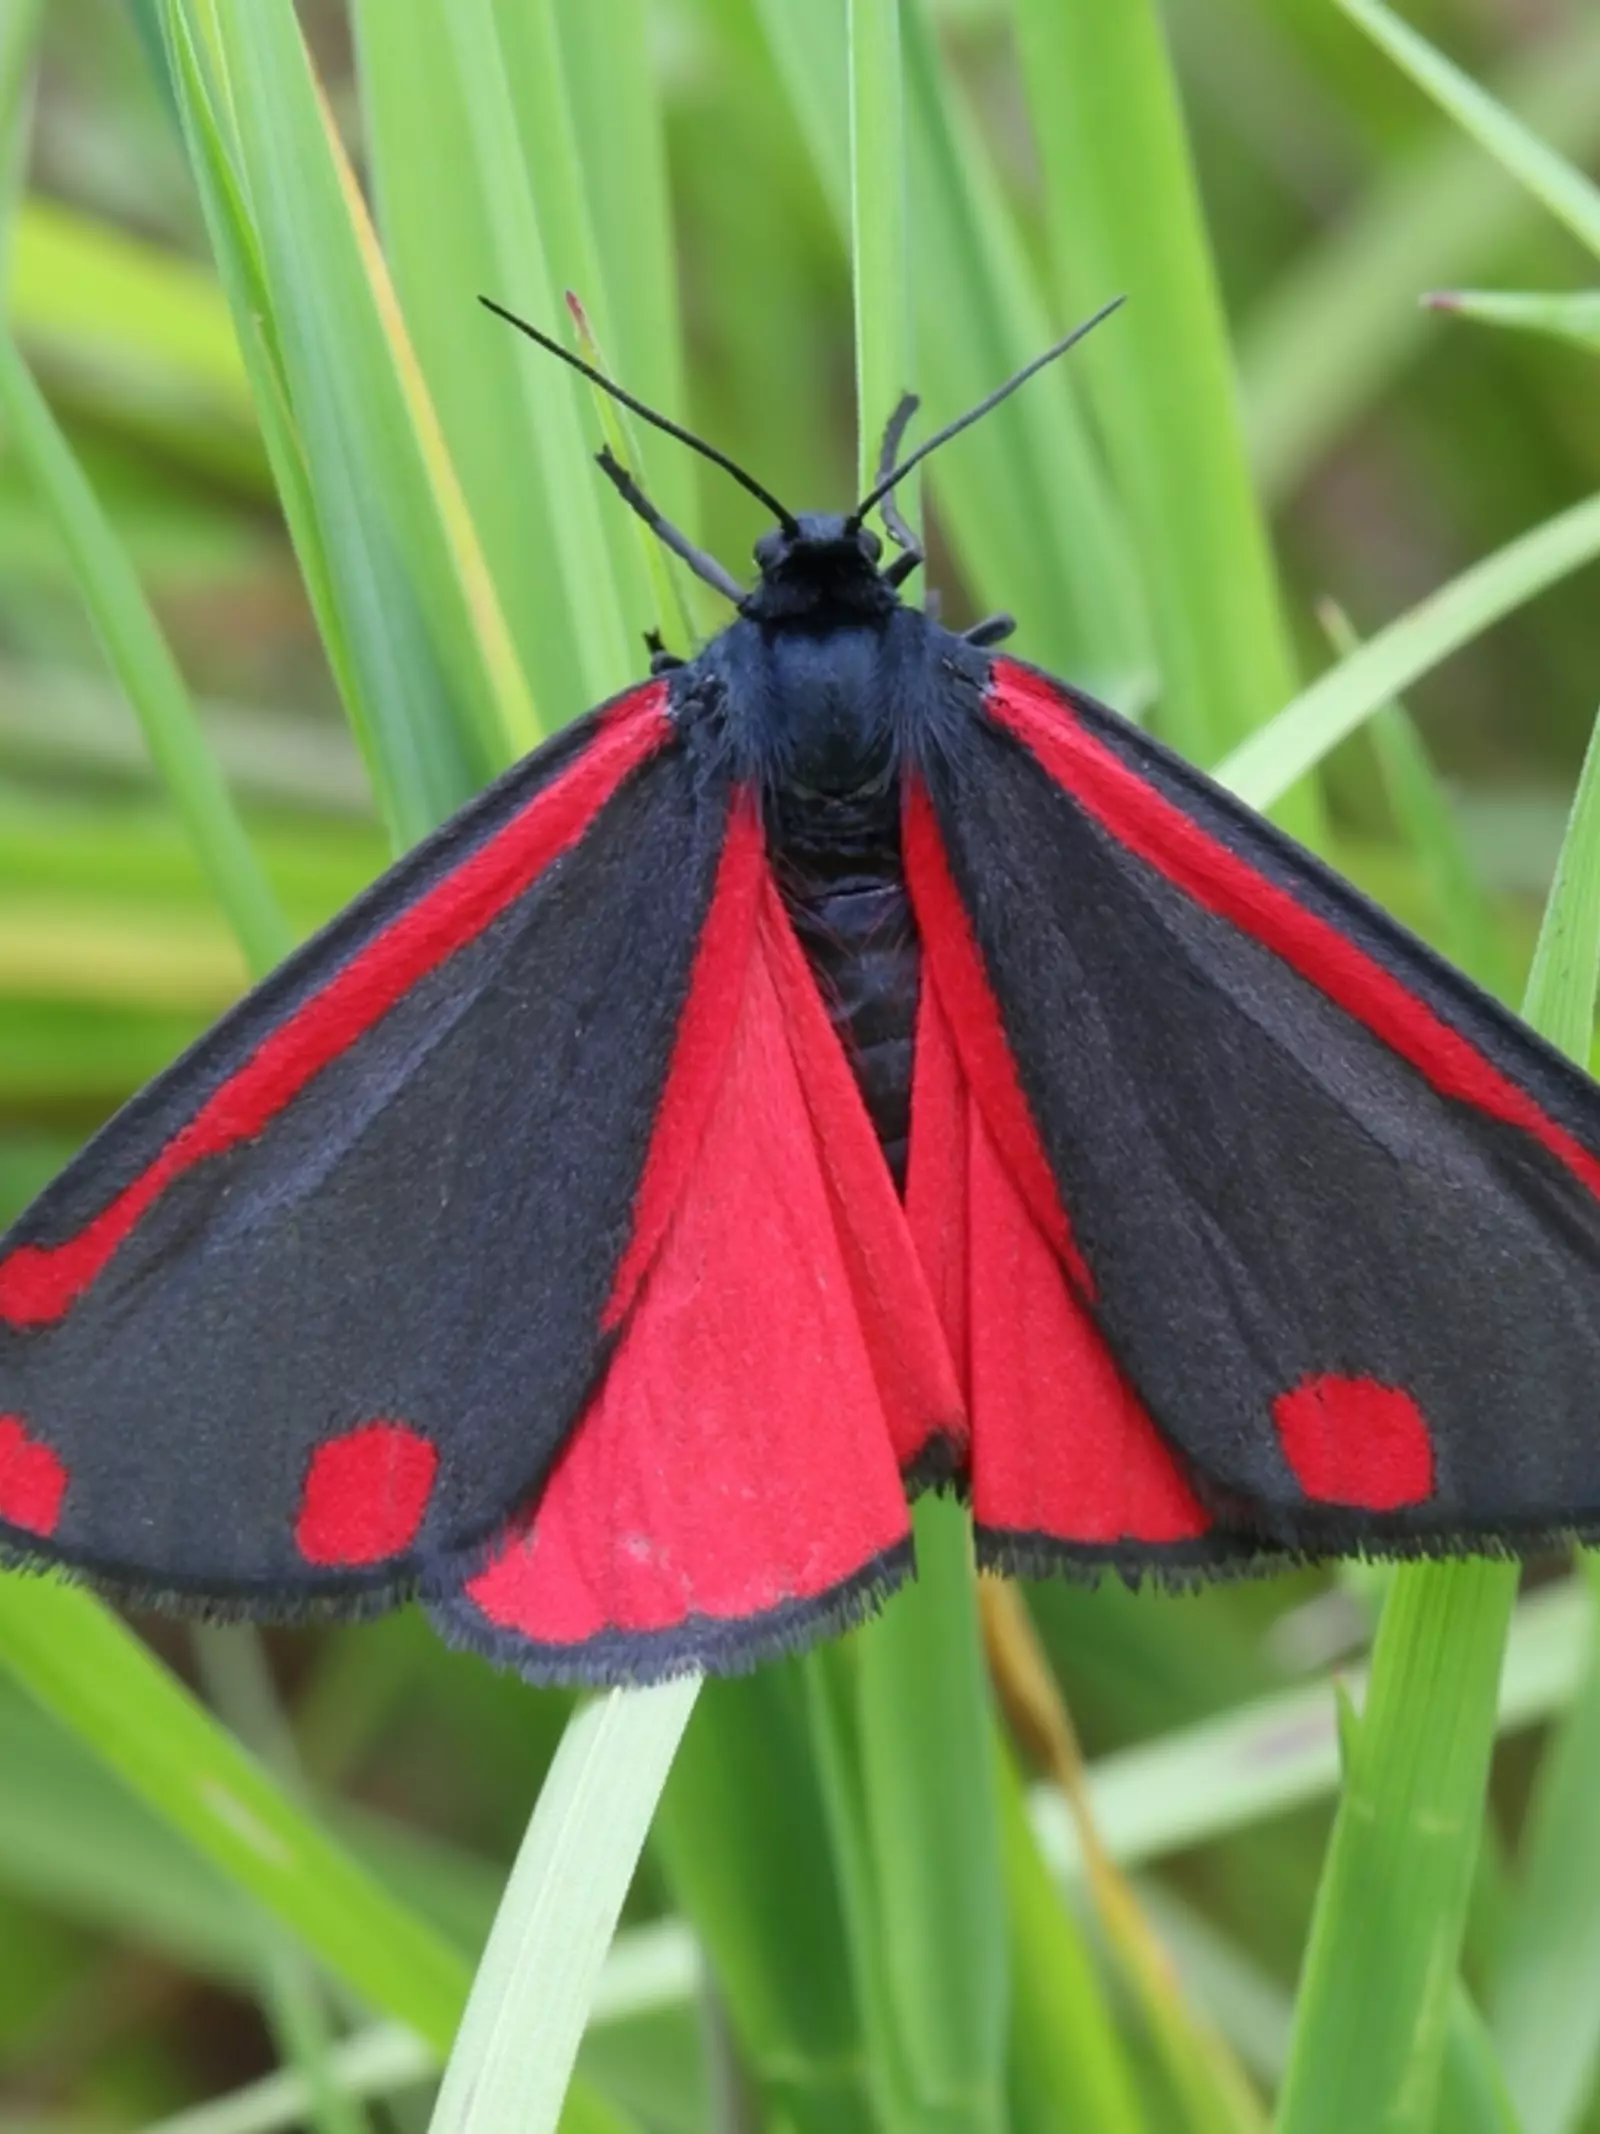 Cinnabar moth, native wildlife found at Whipsnade Zoo